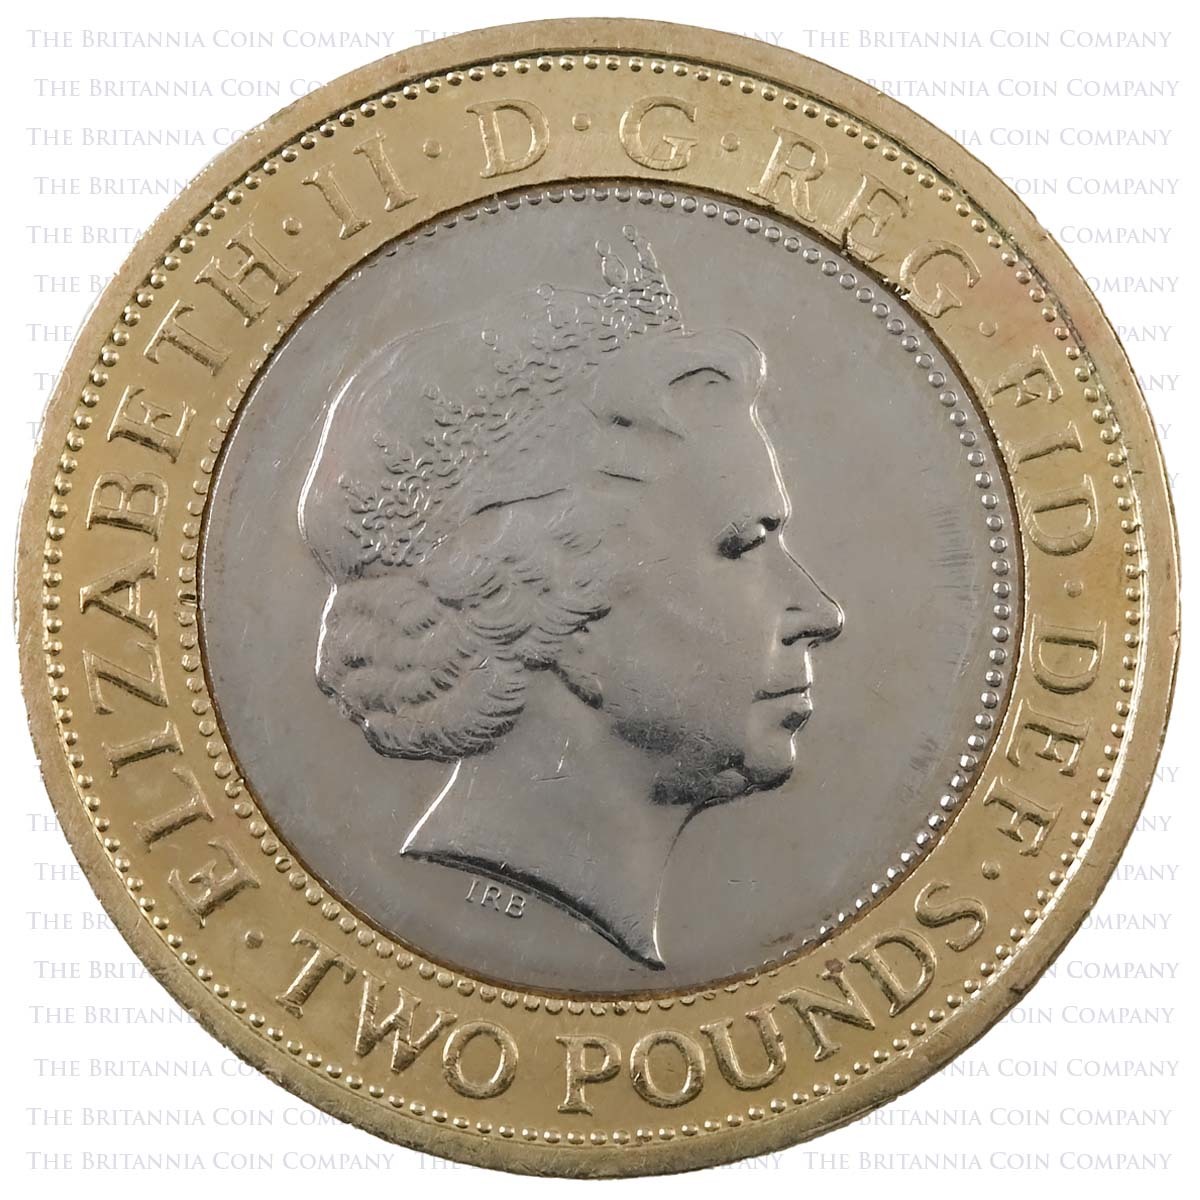 2013 Golden Guinea Circulated Two Pound Coin Obverse